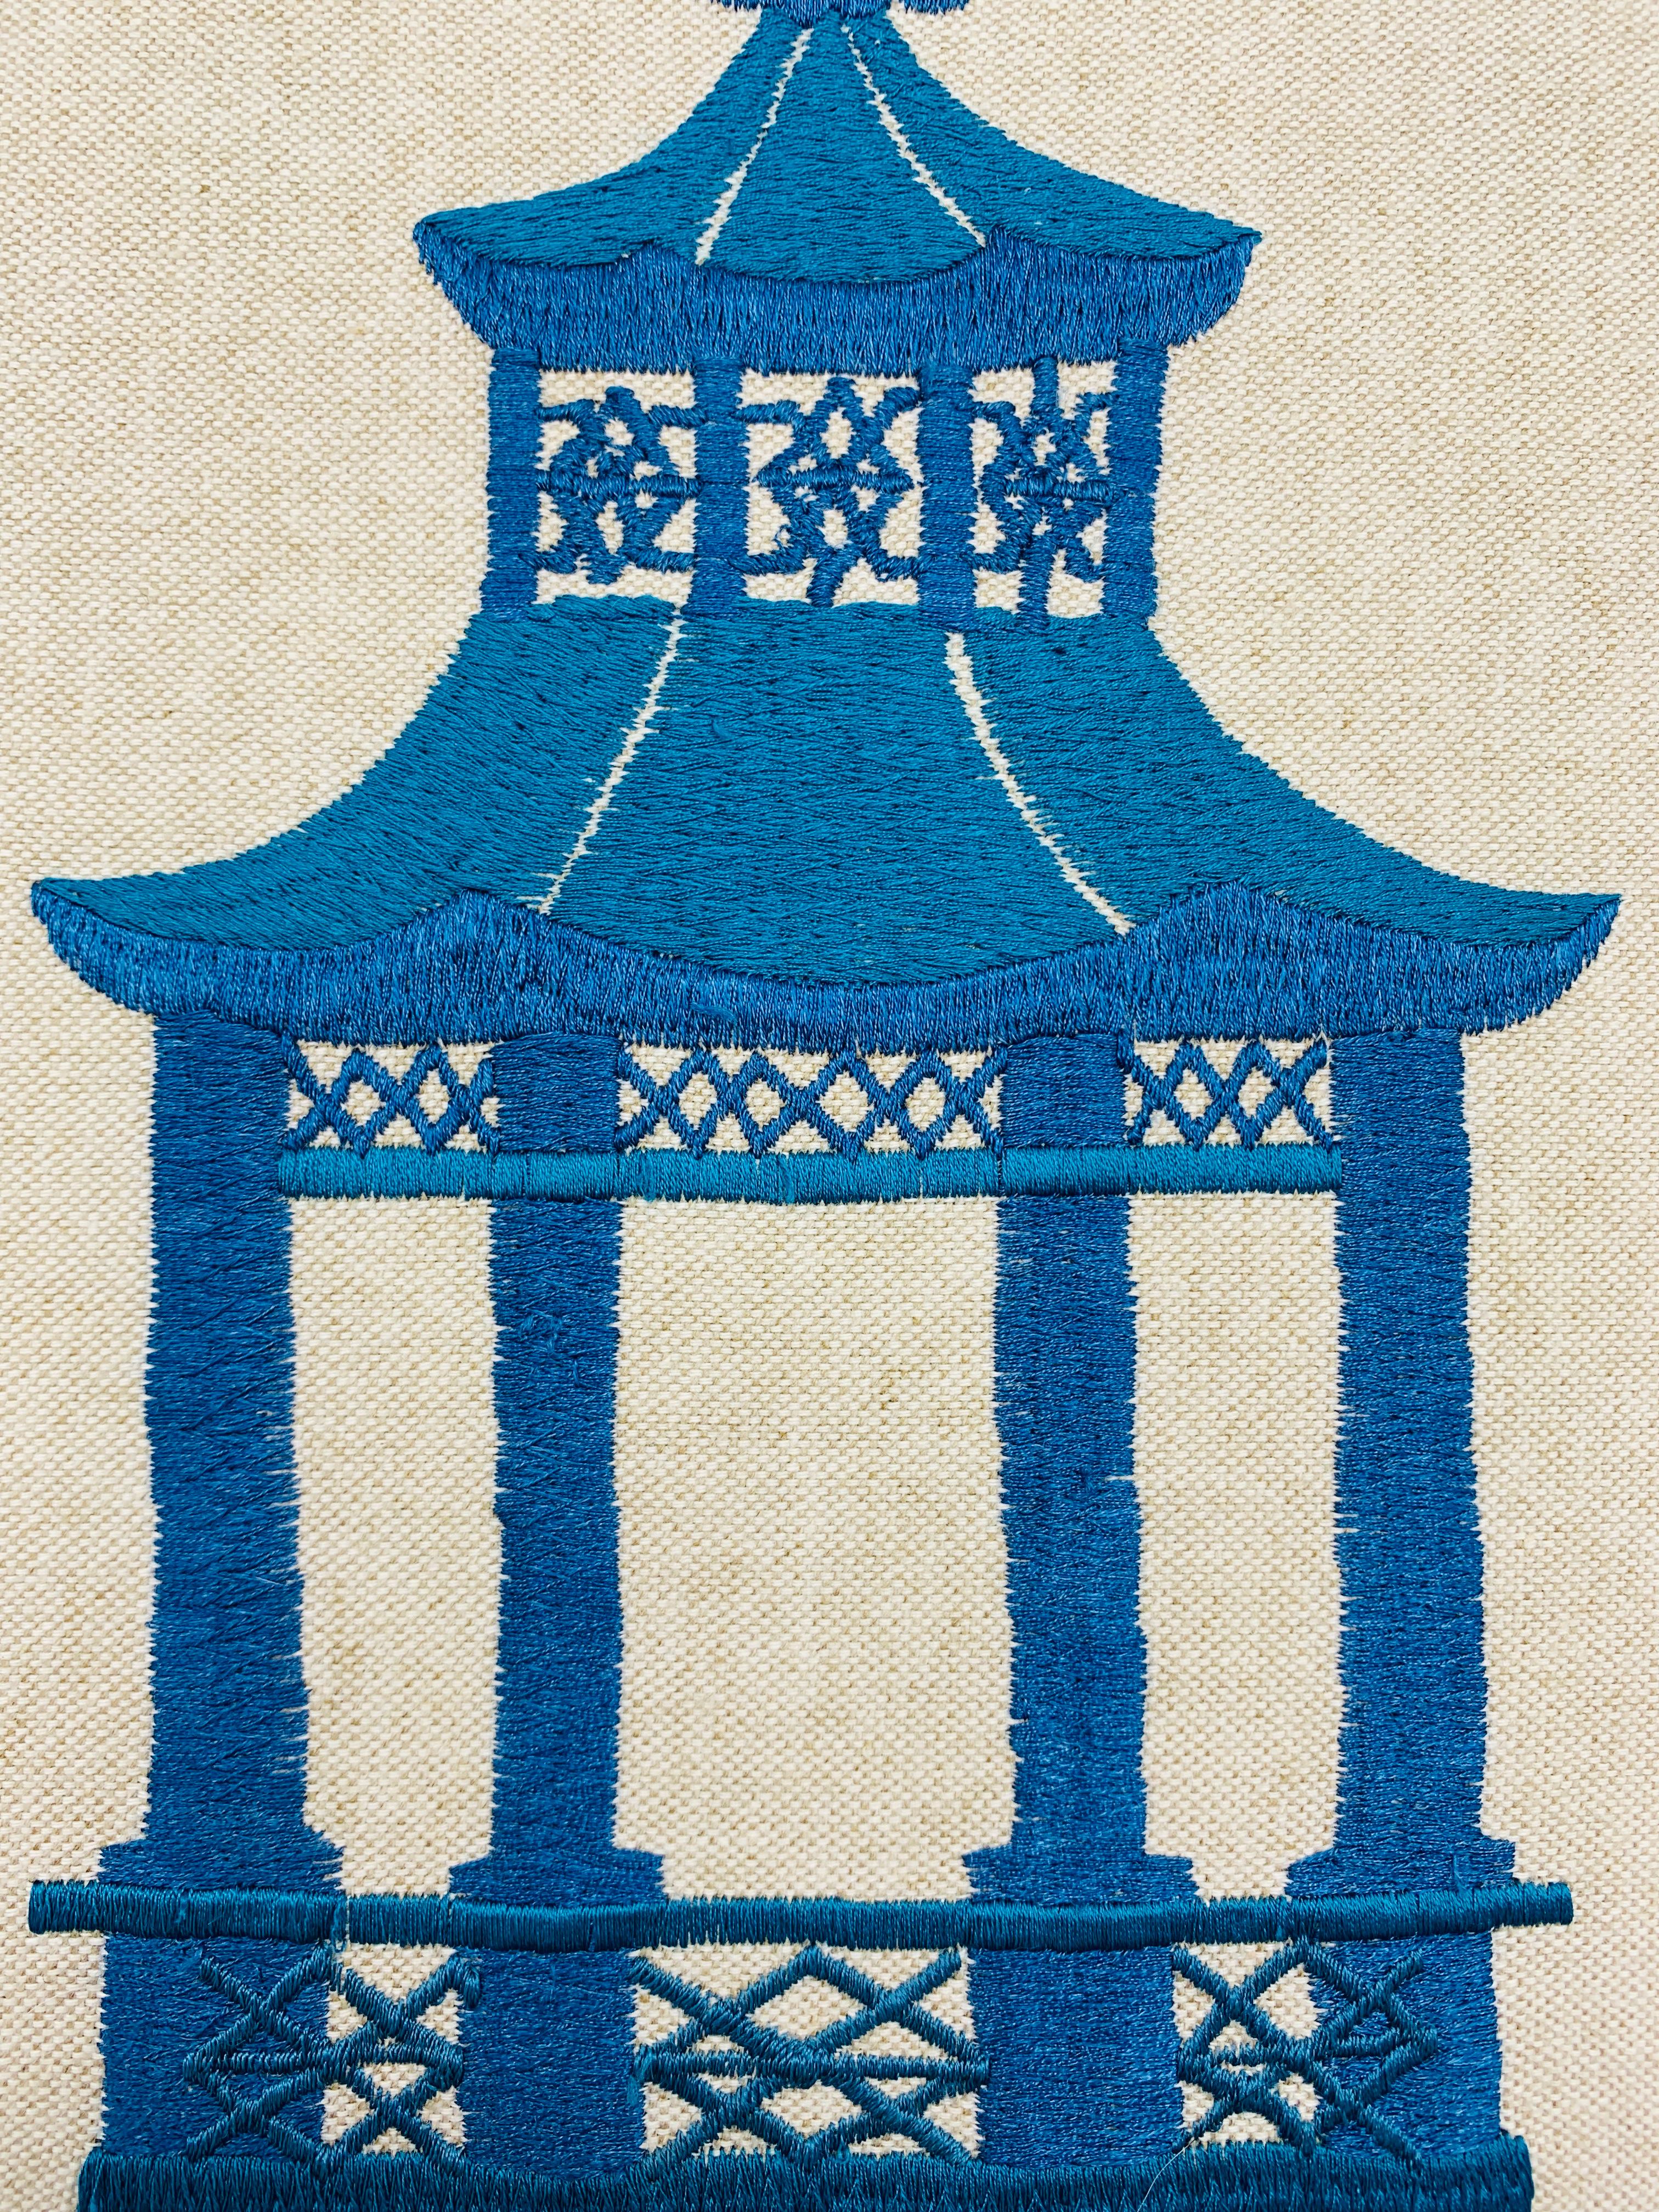 Blue Pagoda Embroidery on Linen Pillow, Custom 1